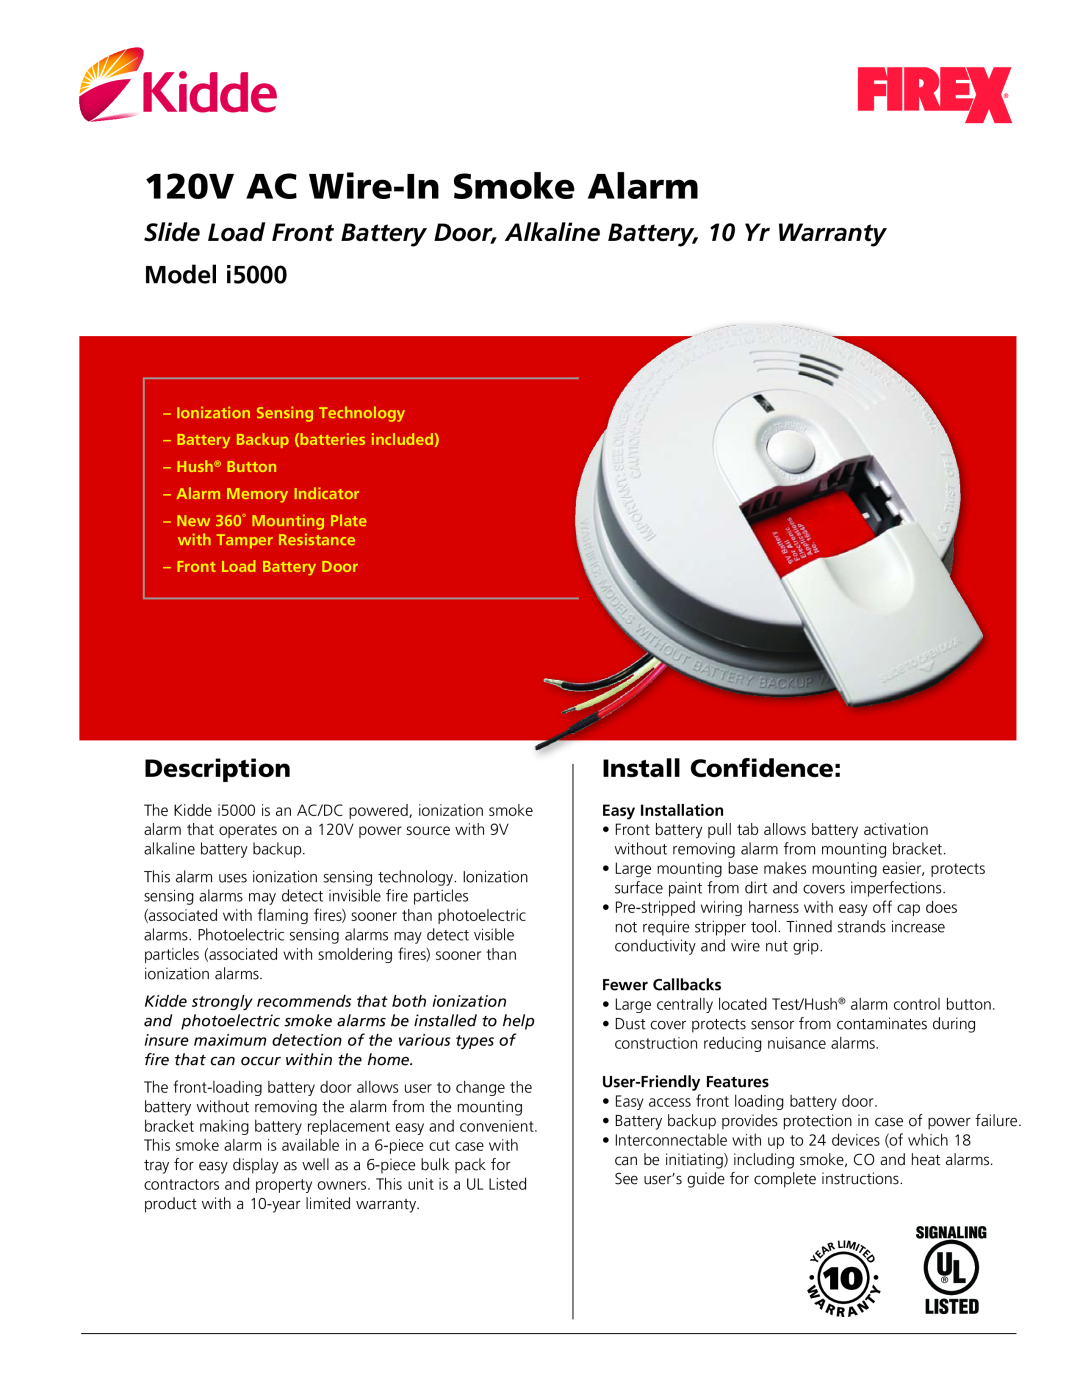 Kidde I5000 warranty Model, Description, Install Confidence, 120V AC Wire-In Smoke Alarm, Front Load Battery Door 